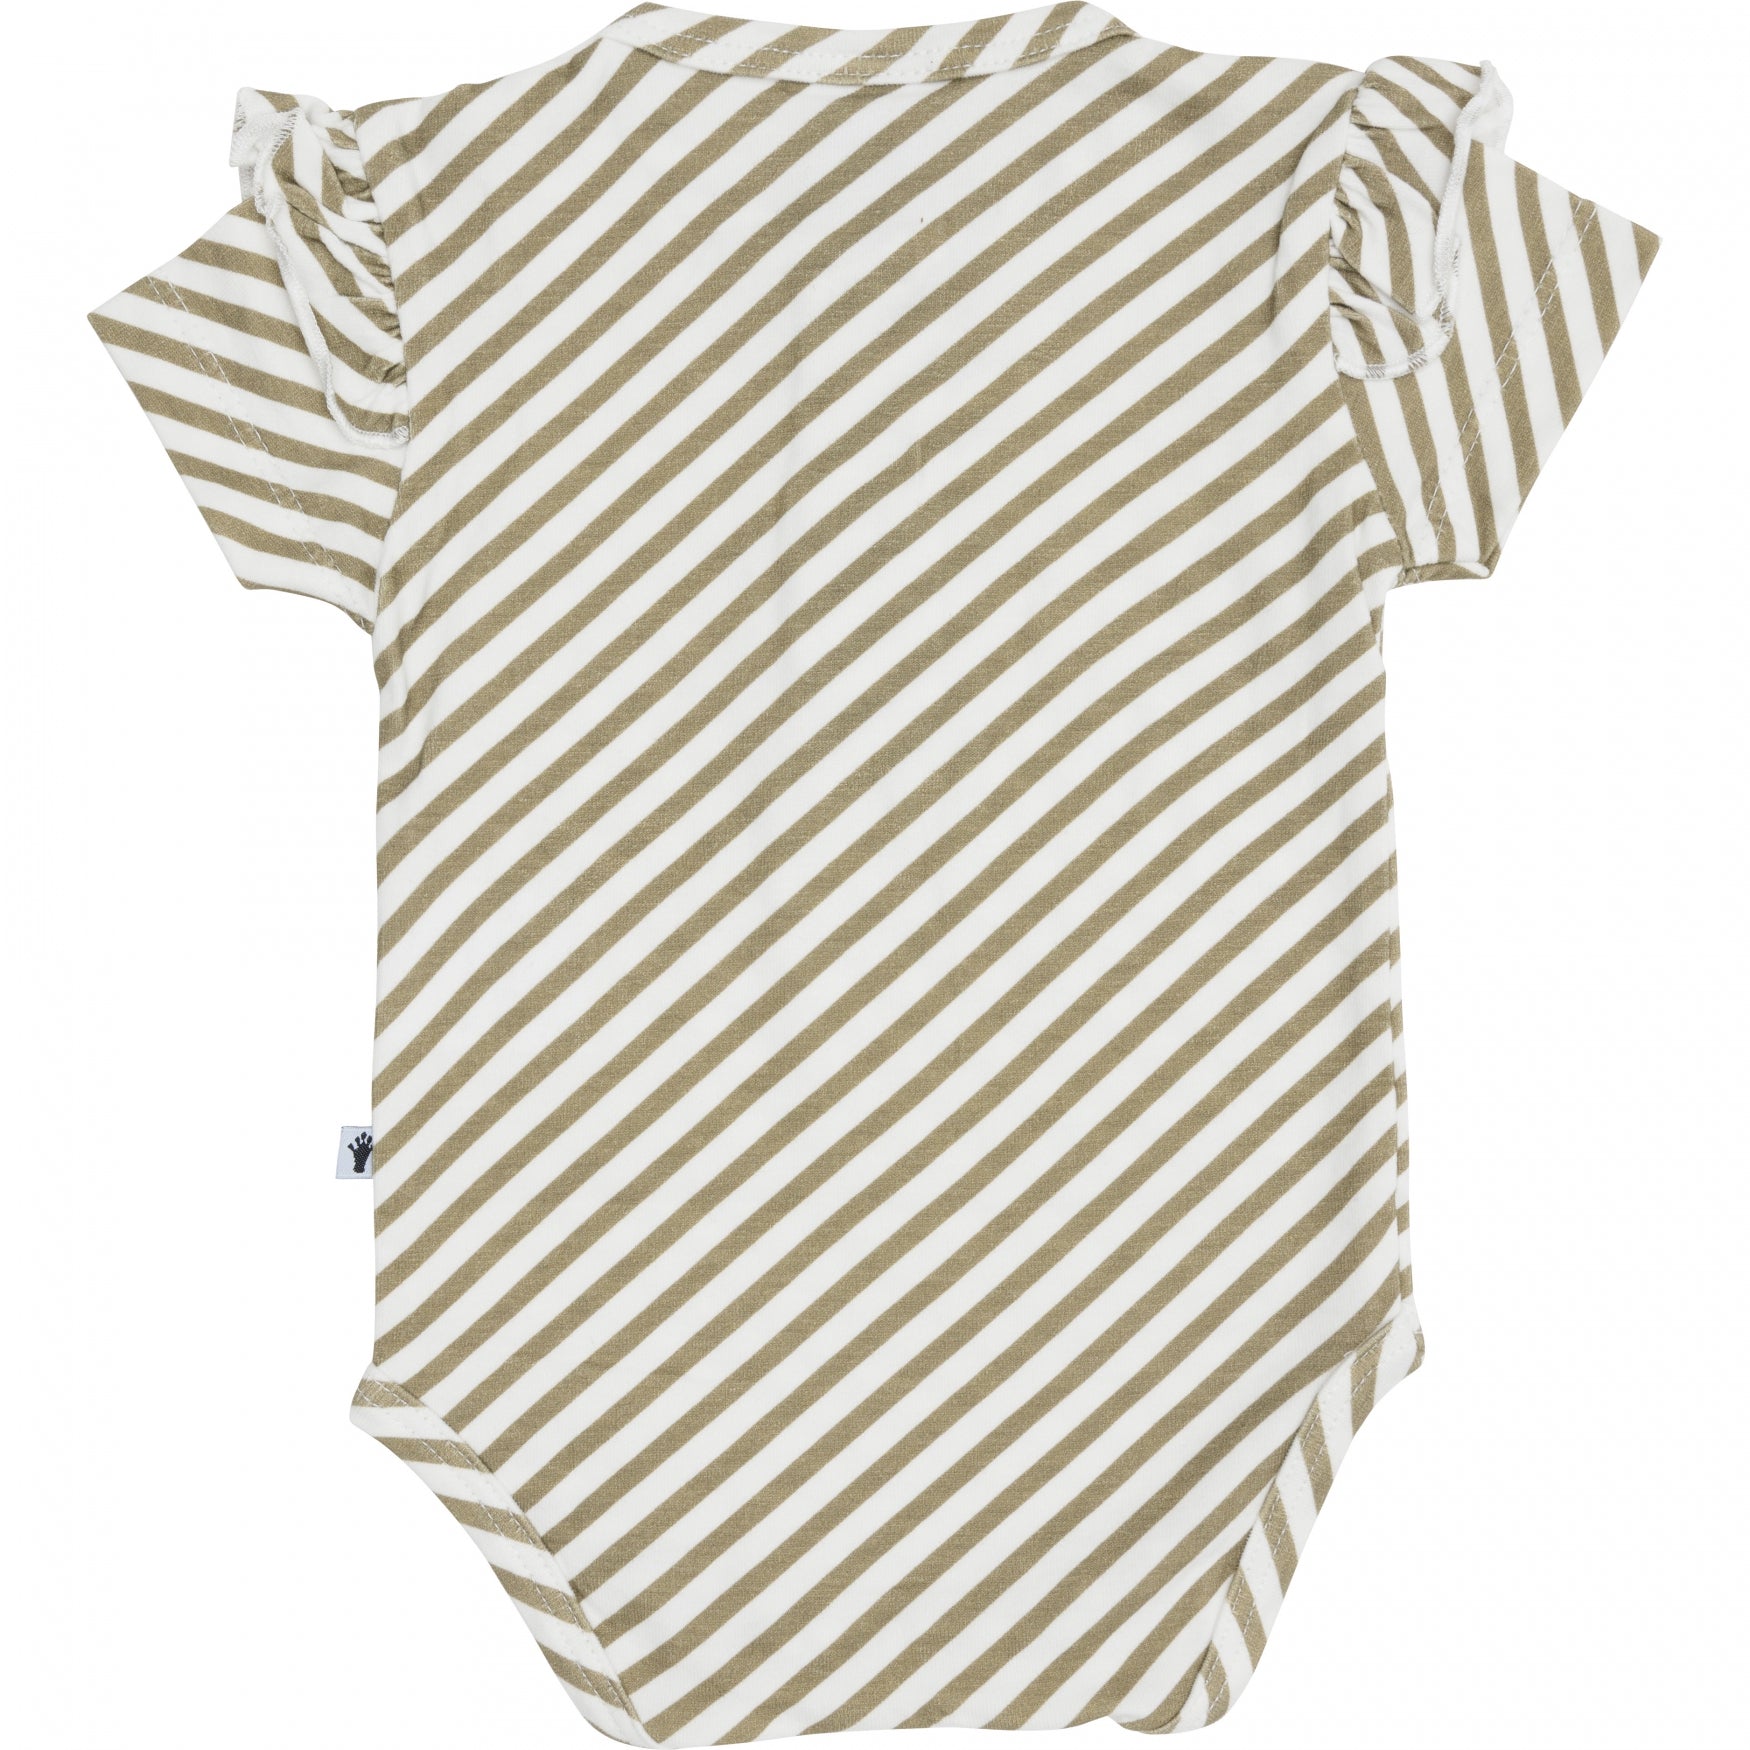 Jongens Body Ruffle Shortsleeve van Klein Baby in de kleur Stripe Off White/Twill in maat 74.